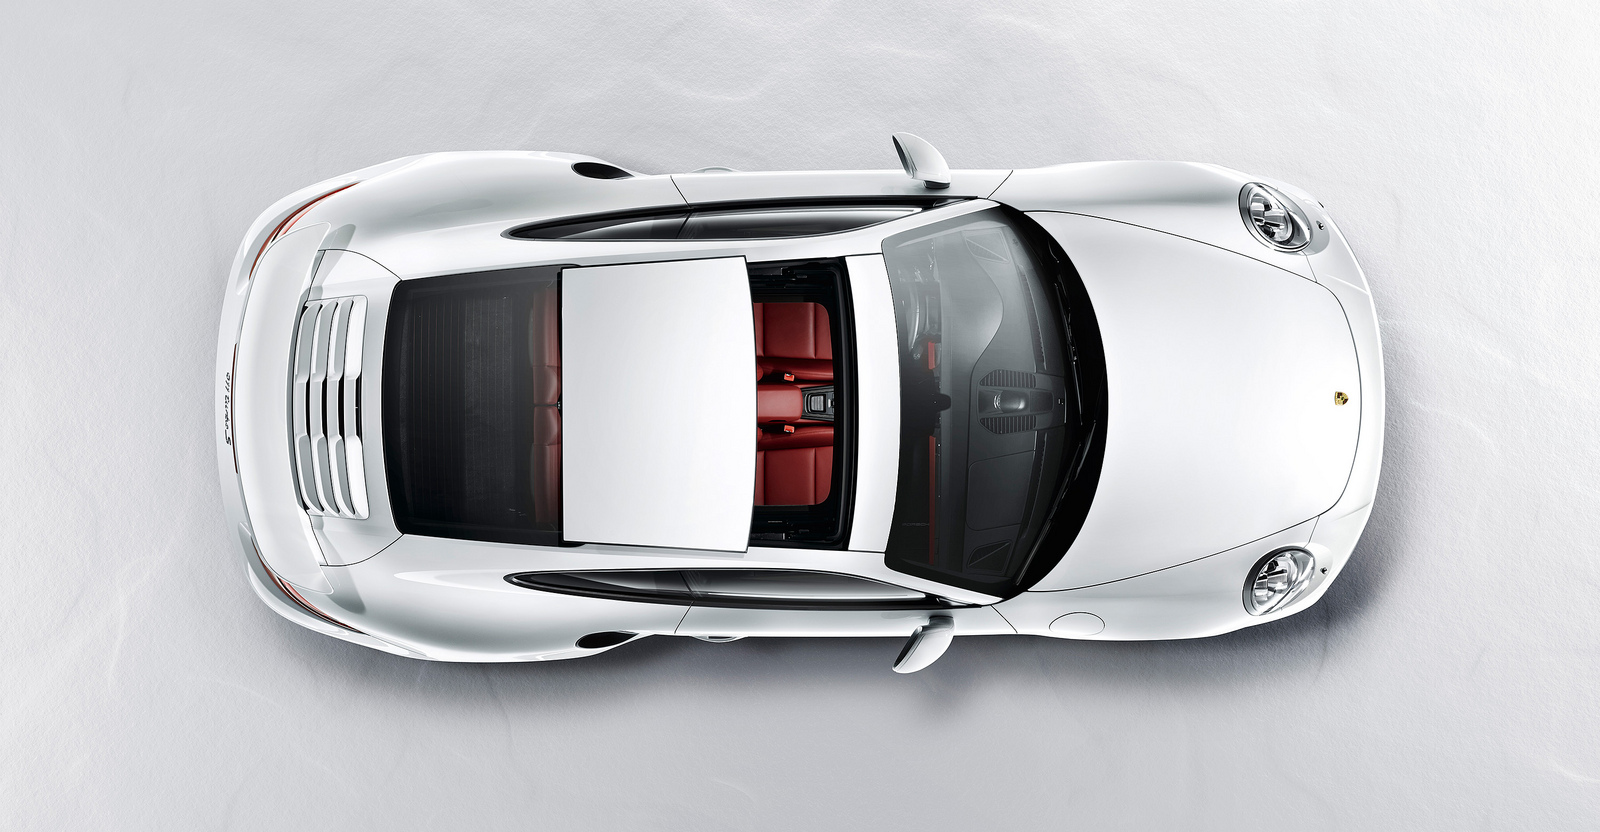 2014 Porsche 911 Turbo S Top View